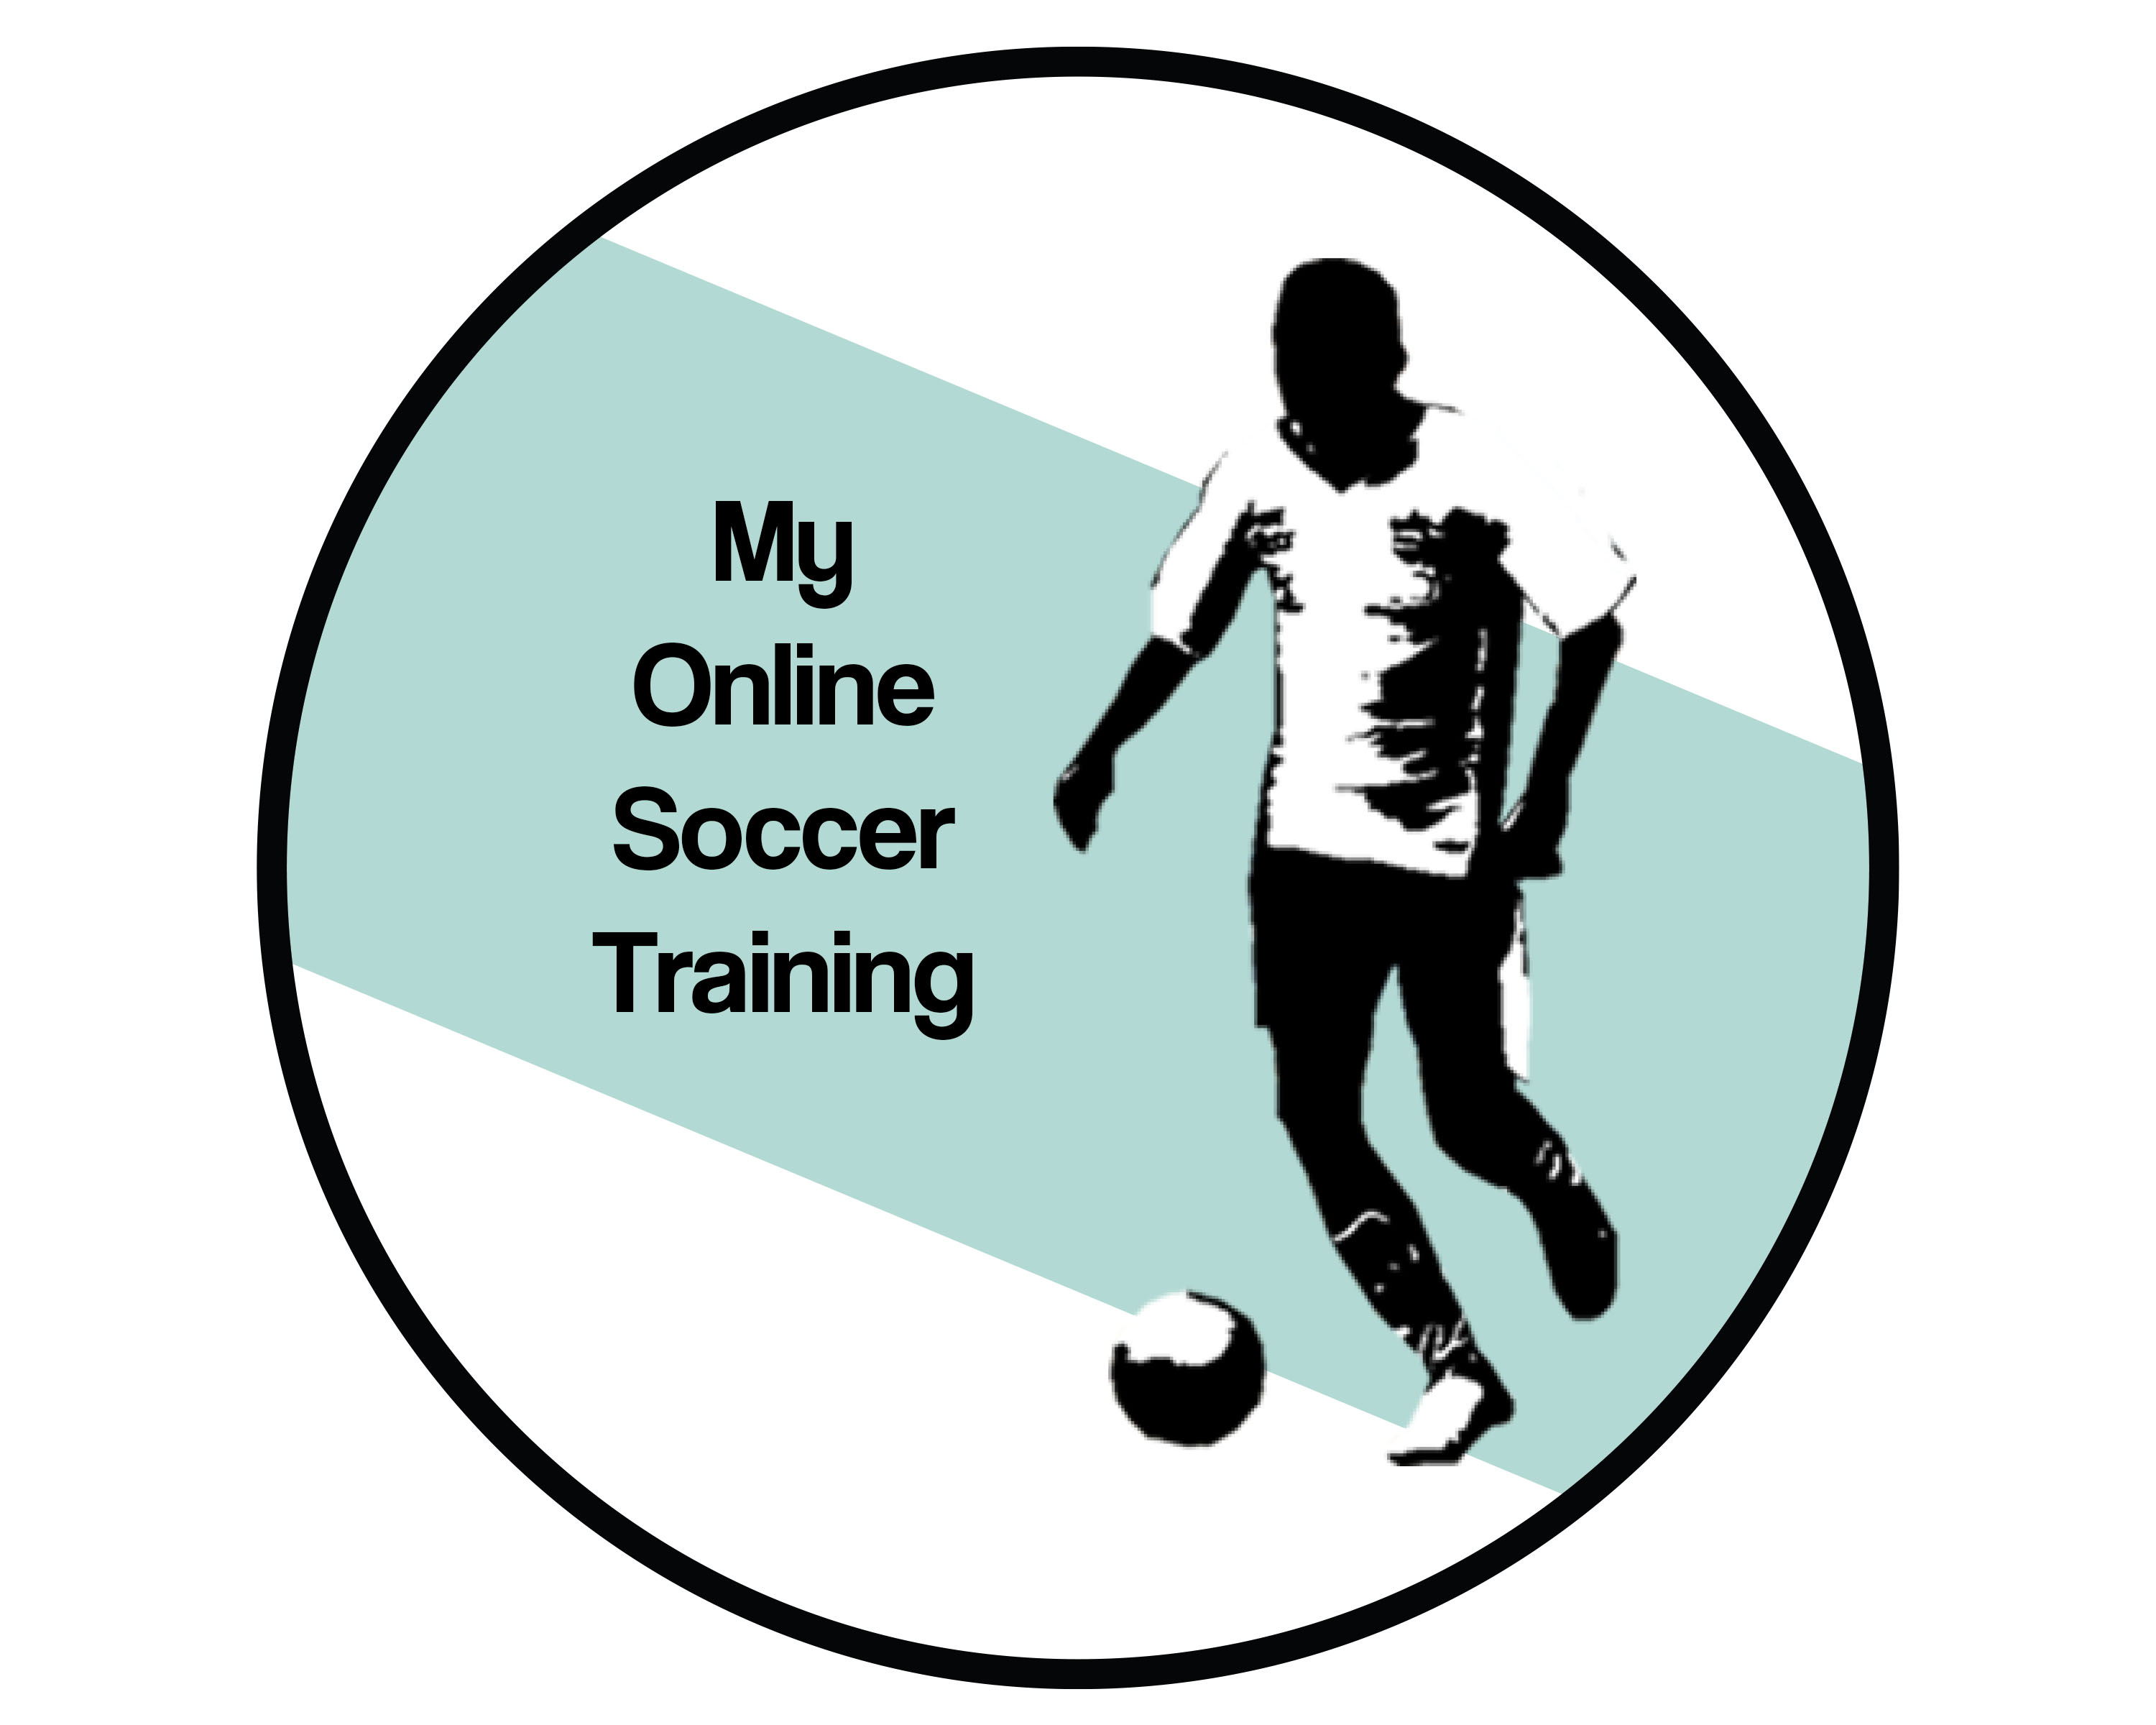 My online soccer training